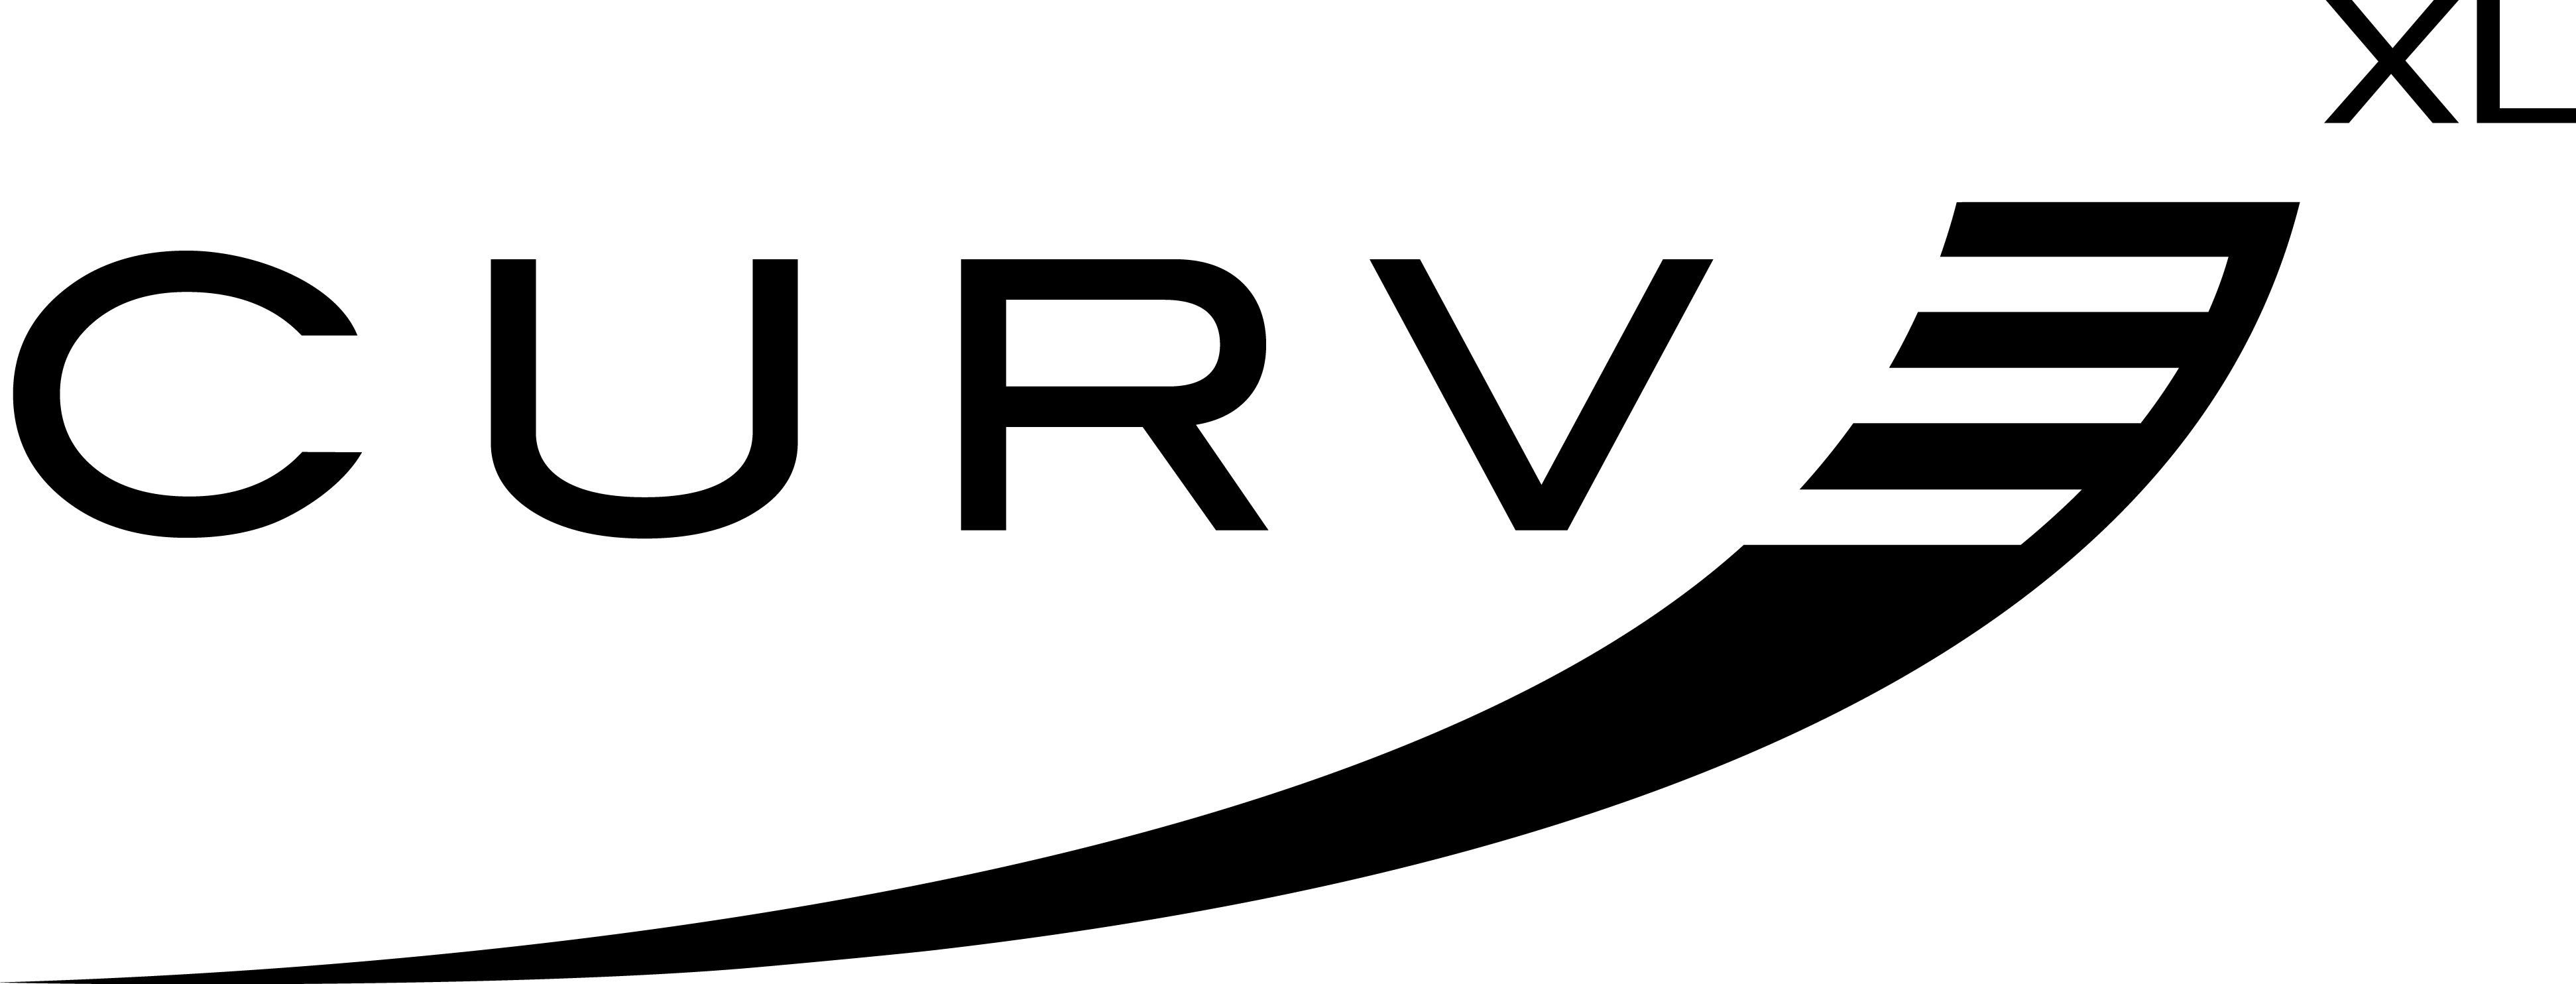 Curves Logo - HD Curve Xl Logo, Free Unlimited Download